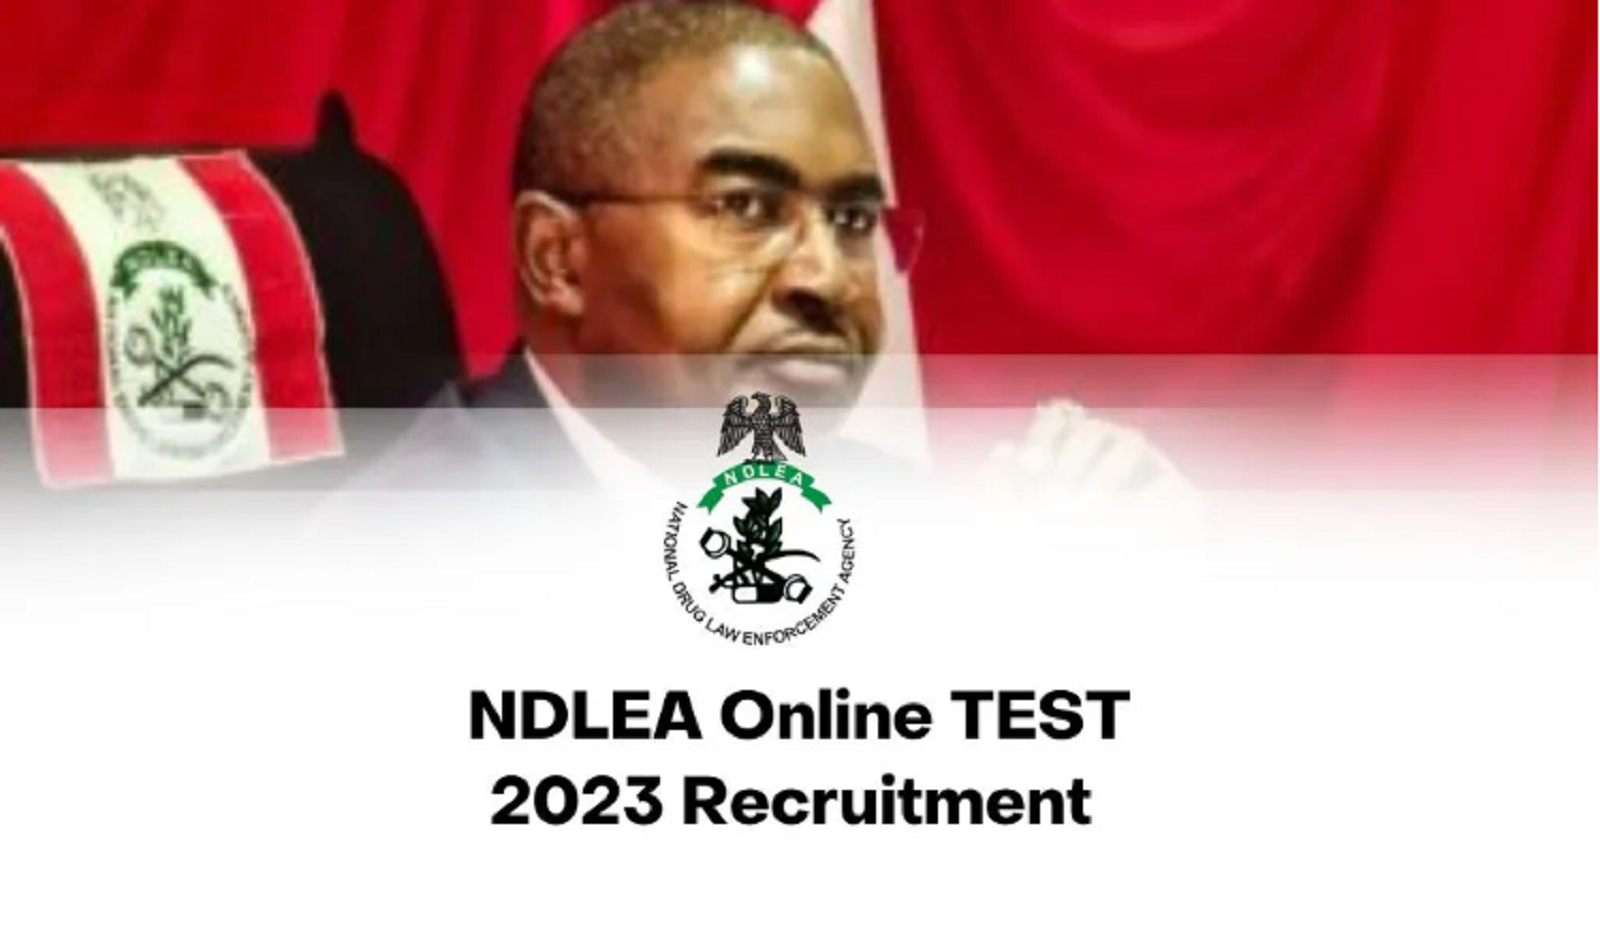 NDLEA Recruitment Test Results